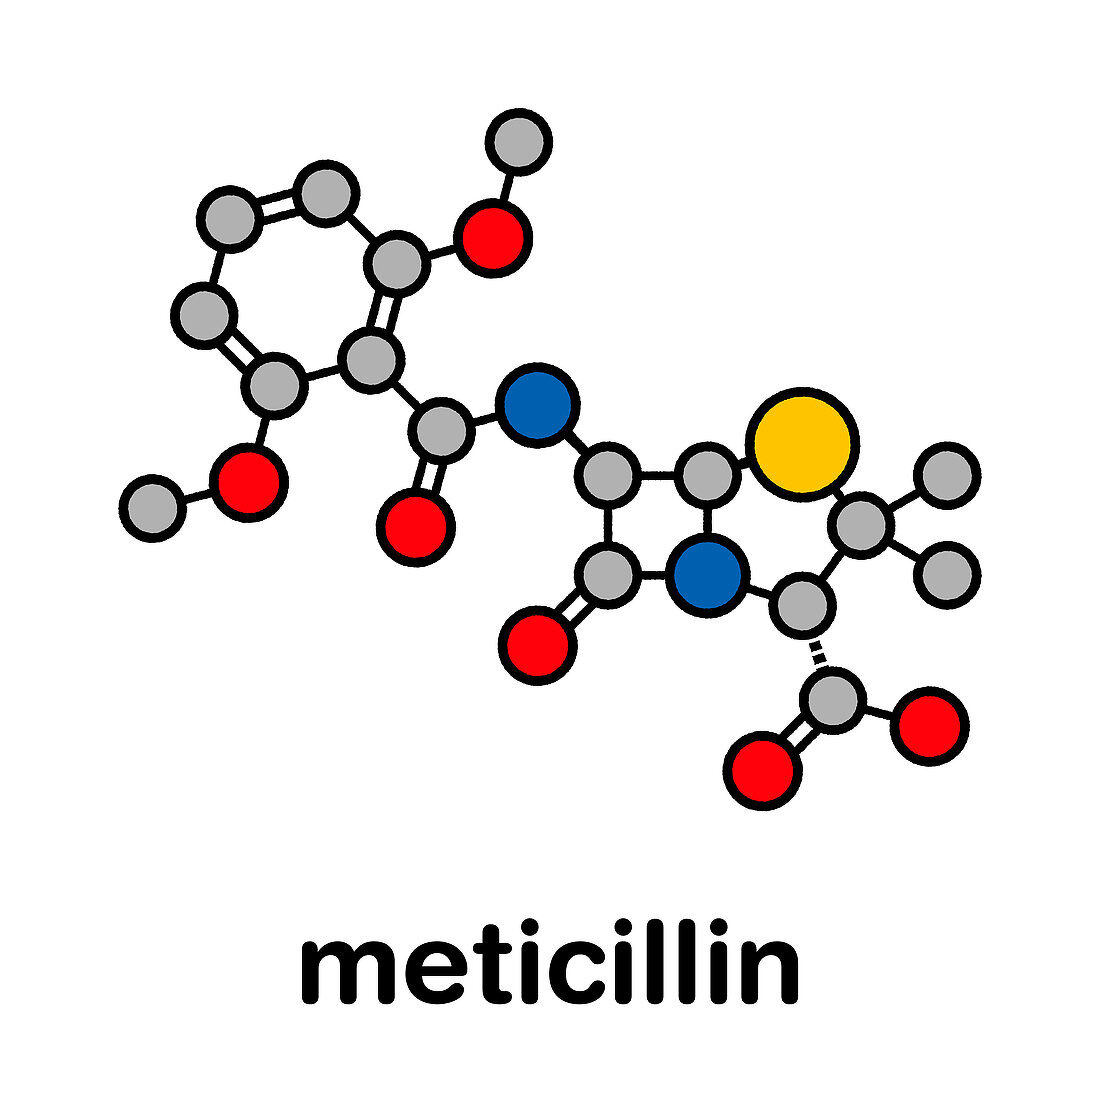 Meticillin antibiotic drug, molecular model